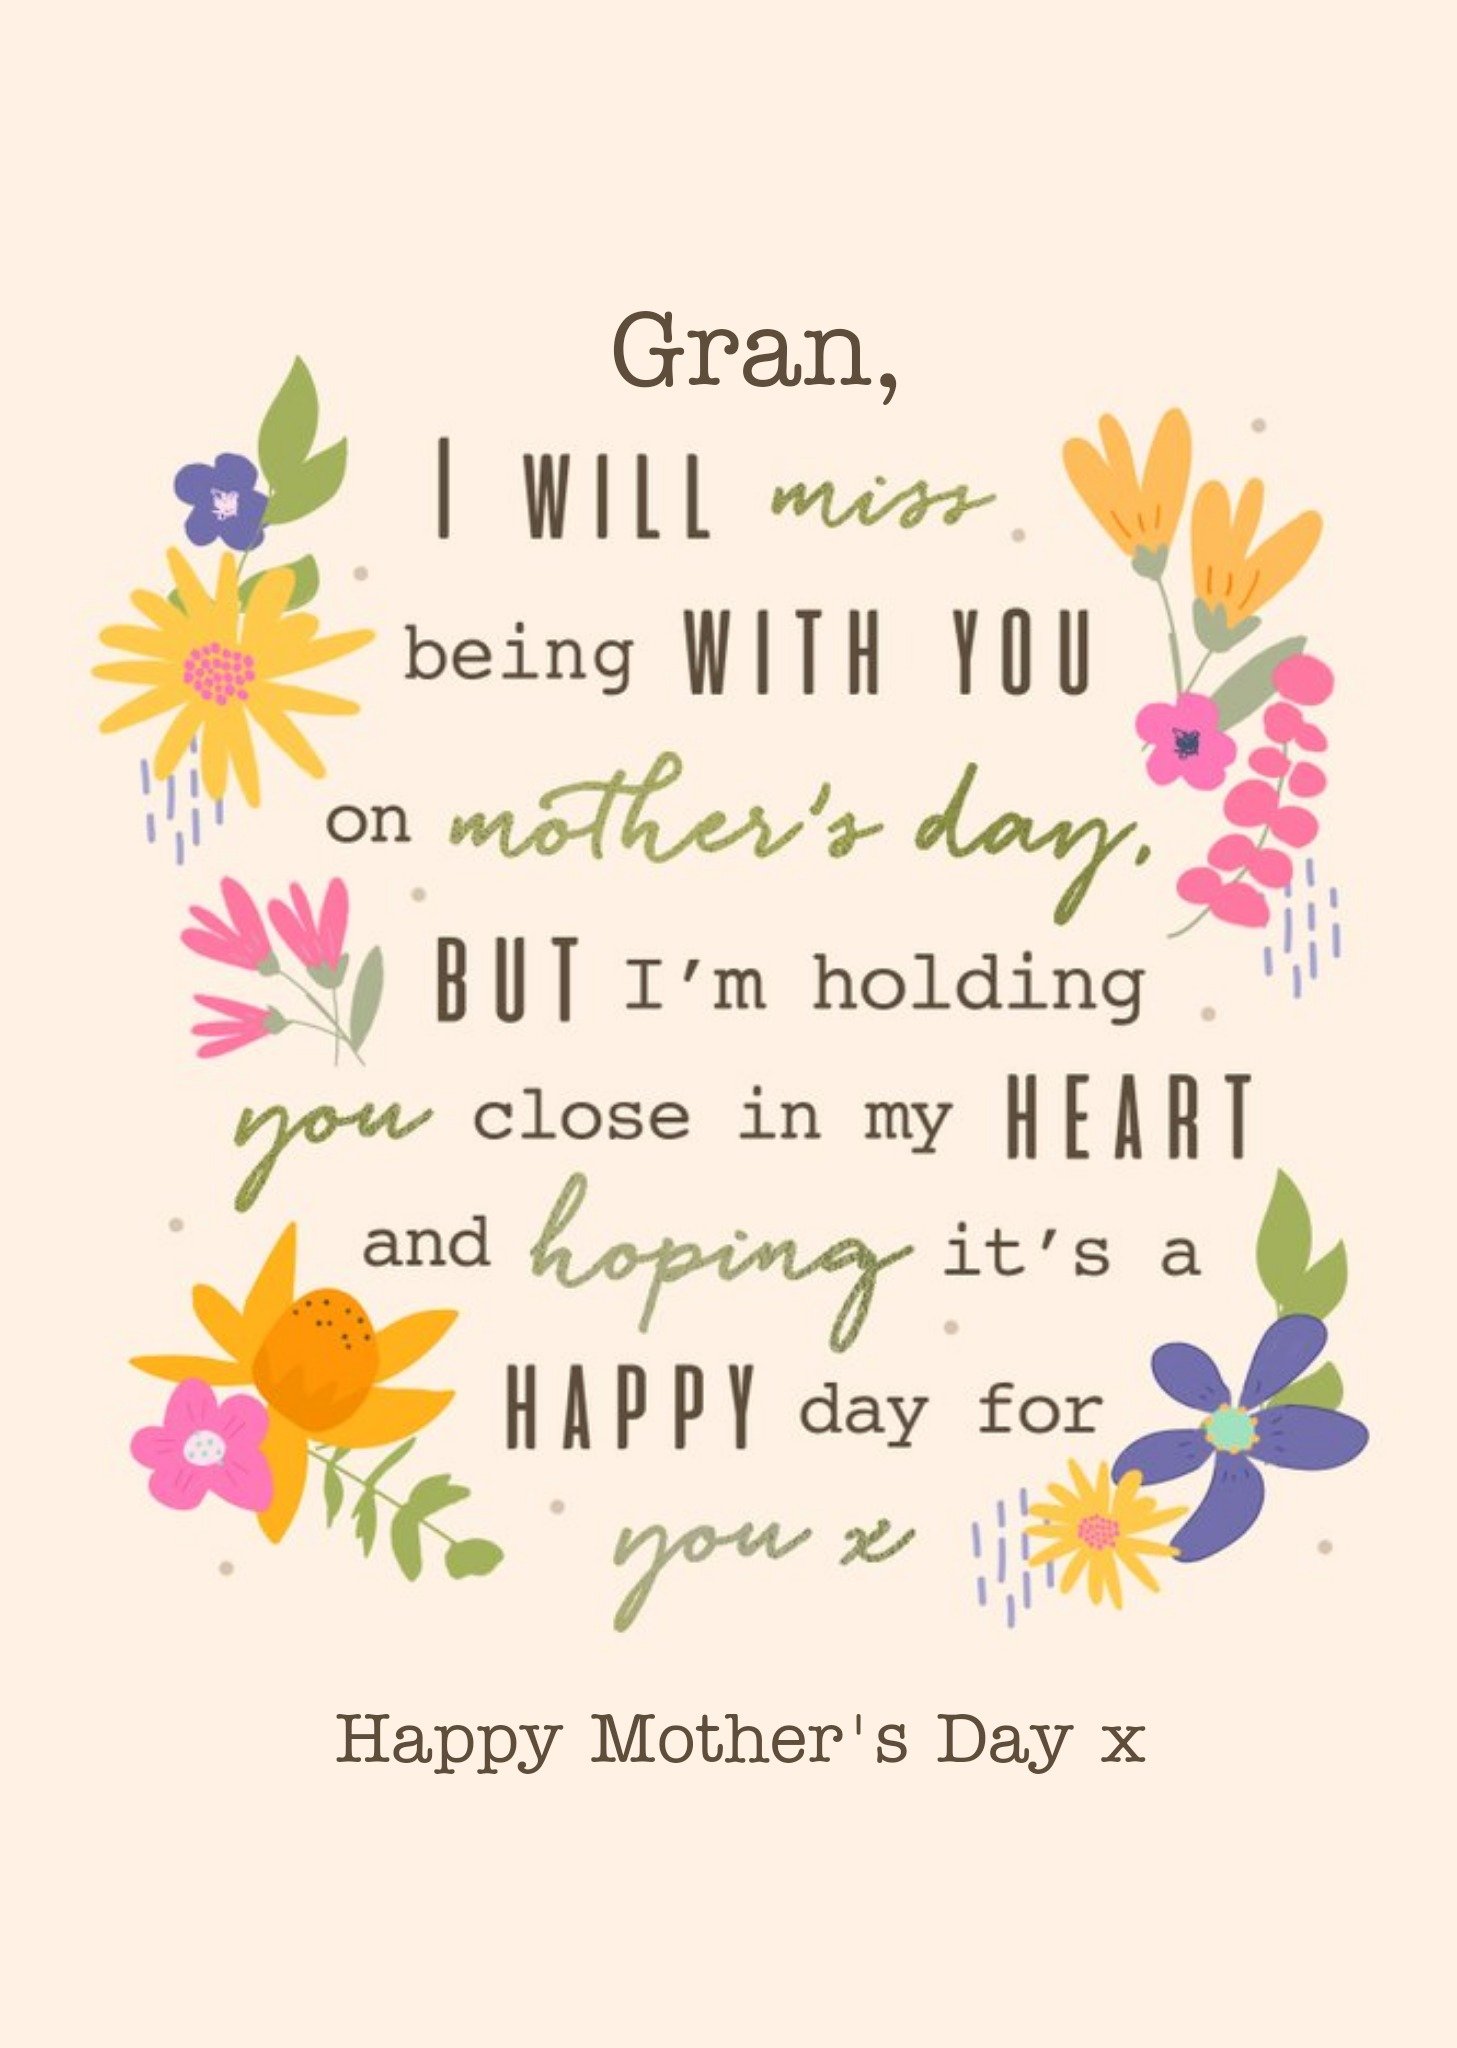 Moonpig Granthoughtful Words Modern Floral Design Mother's Day Card Ecard